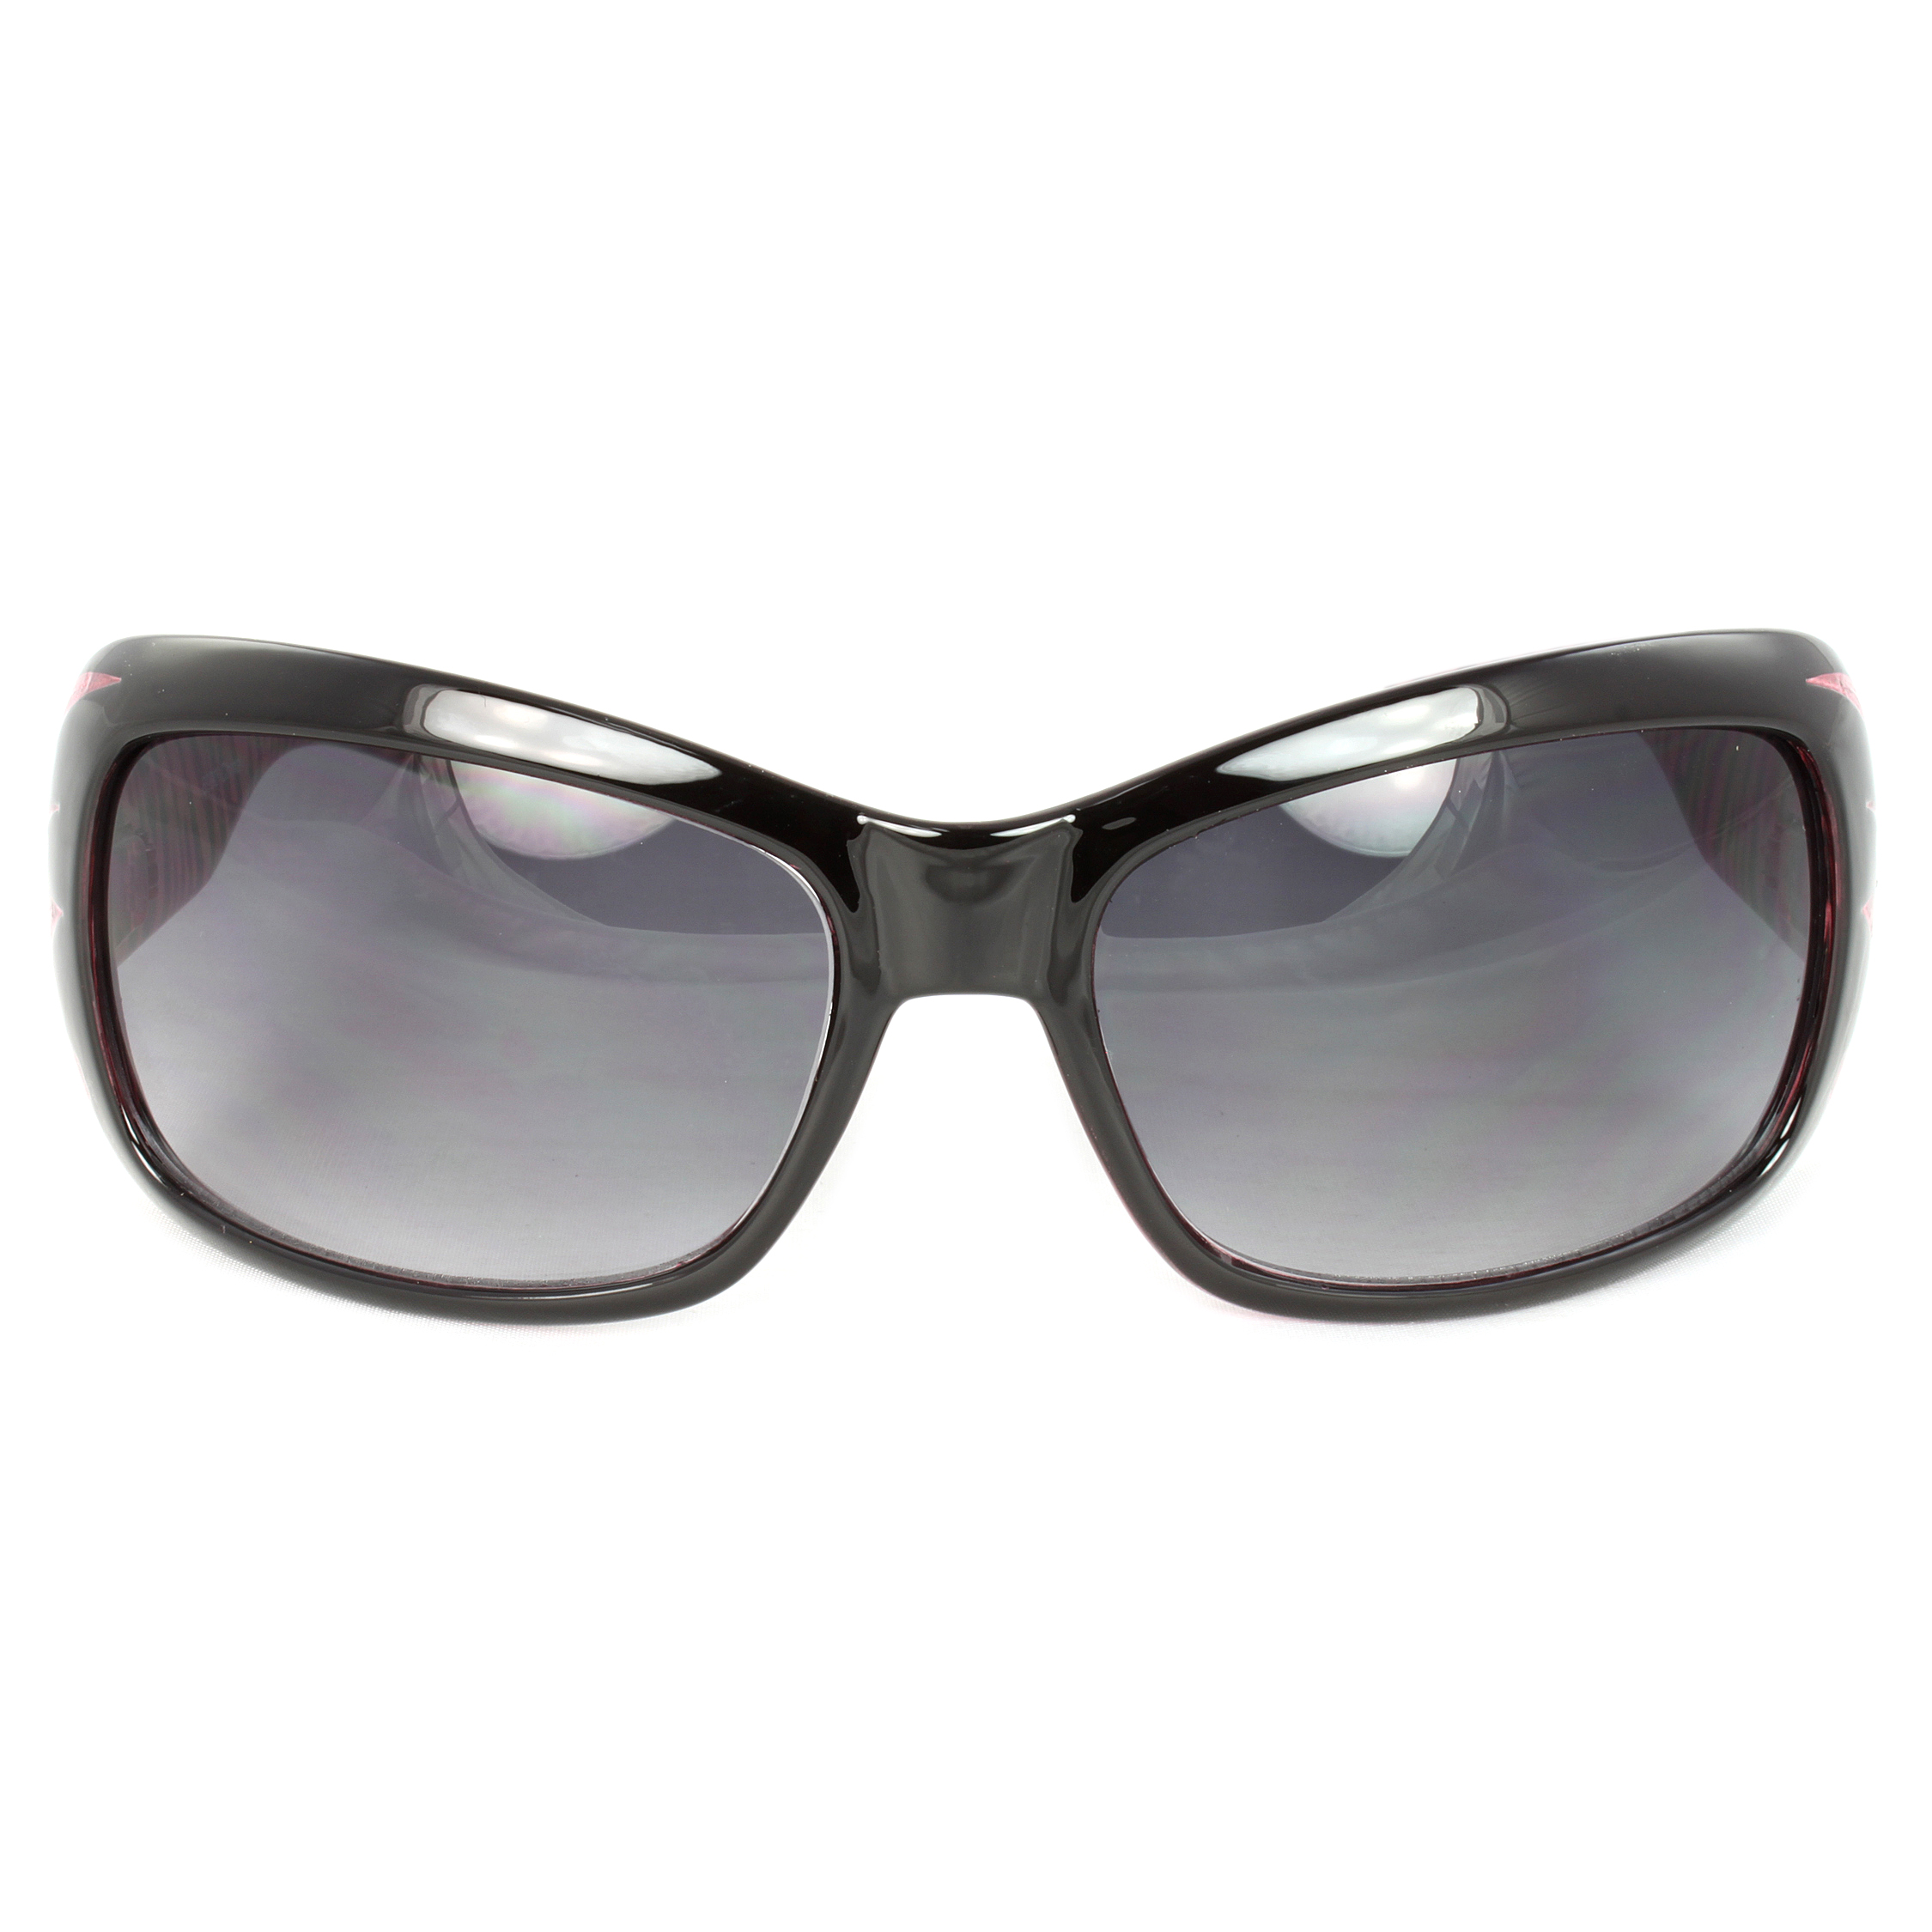 Stylish Shield Sunglasses Black Pink Frame Purple Black Lenses for Women and Men - image 2 of 2